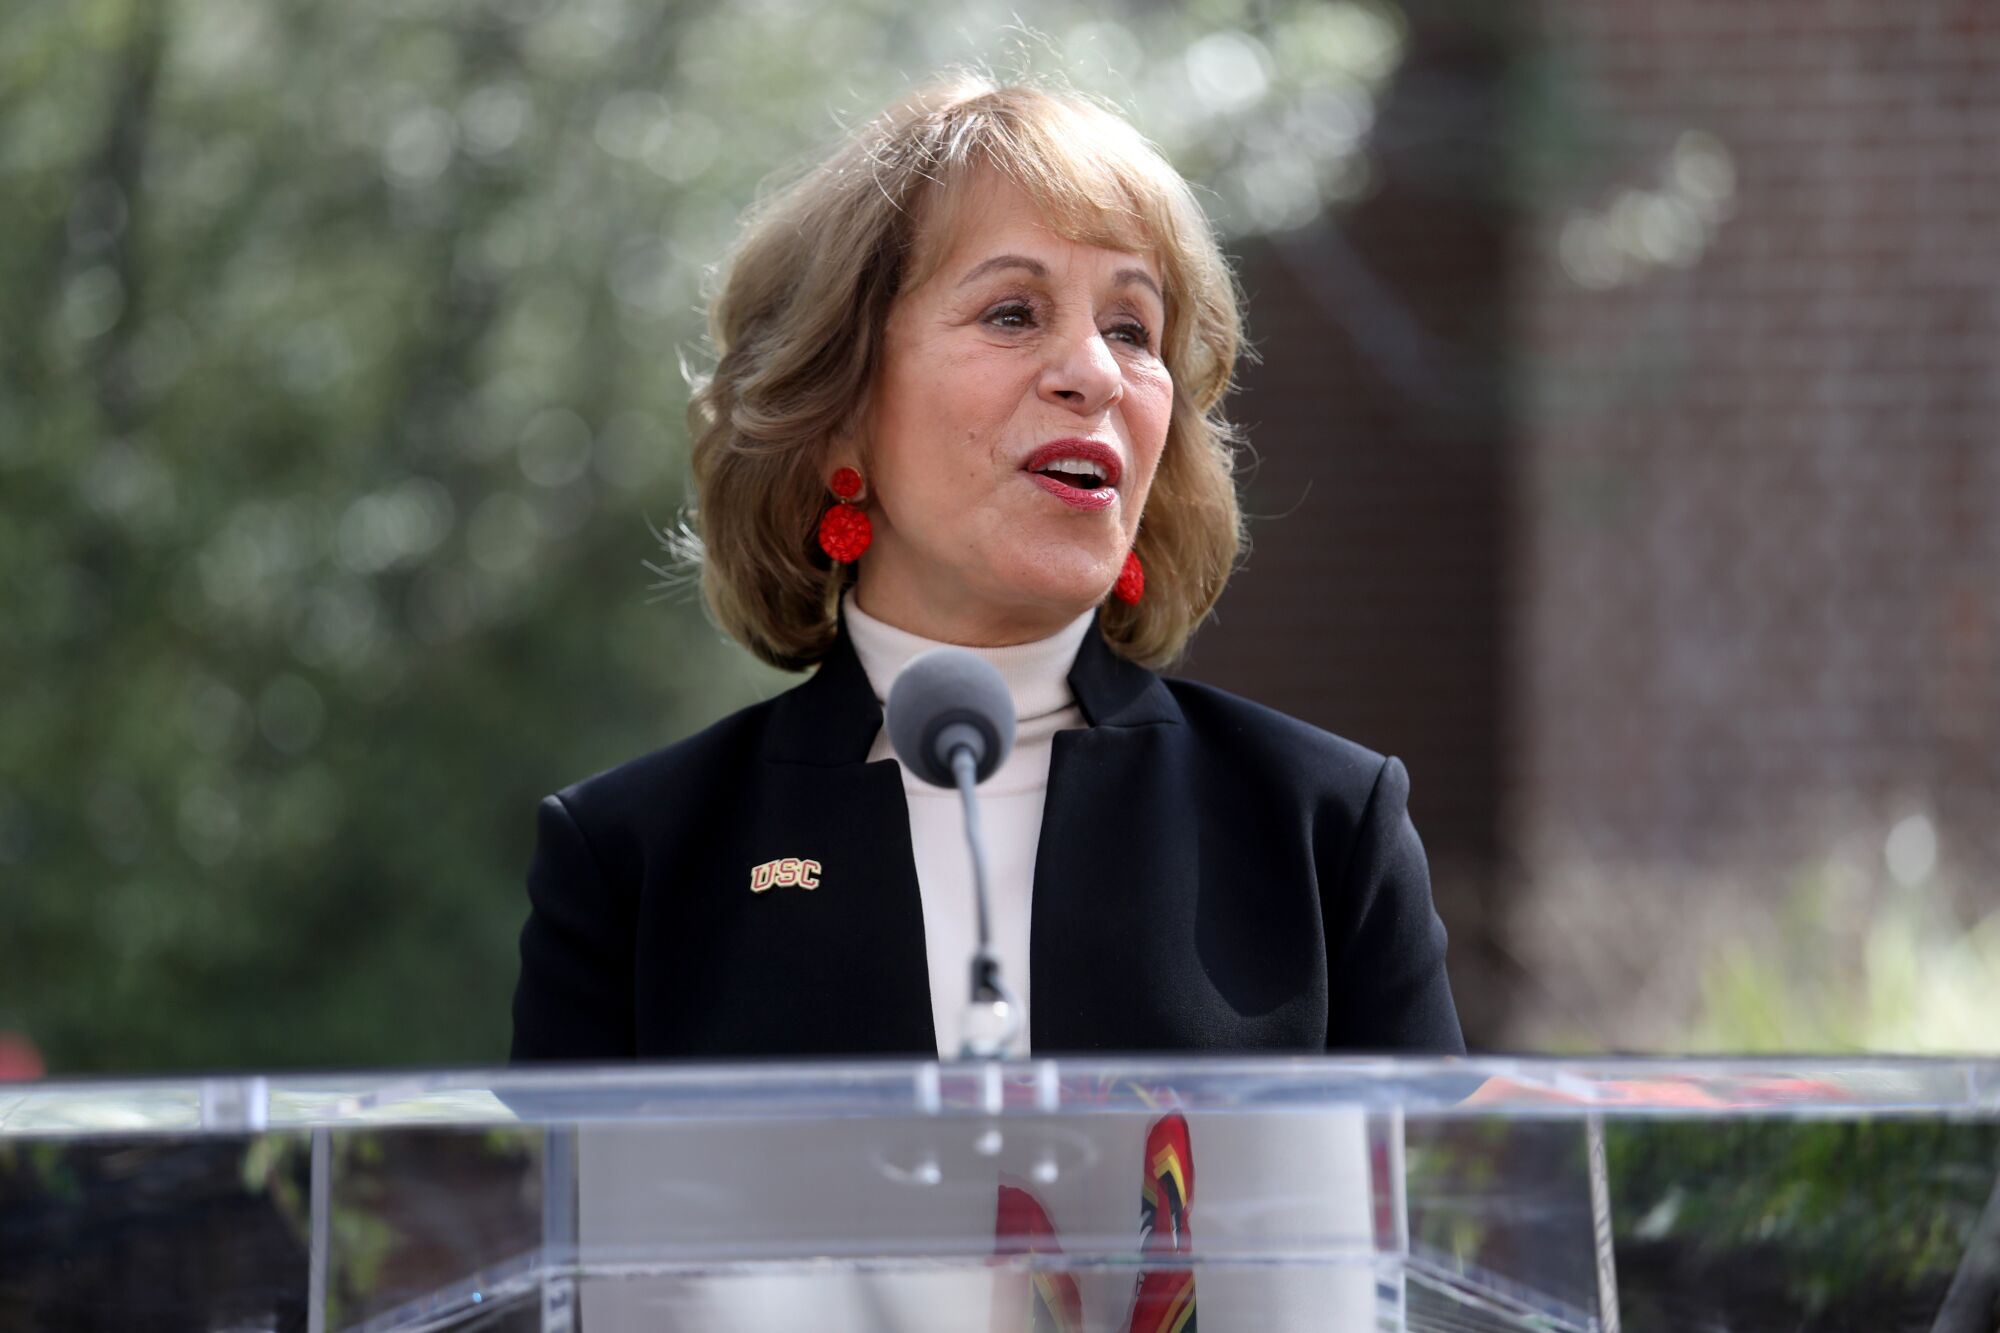 USC president Carol Folt standing at a lectern